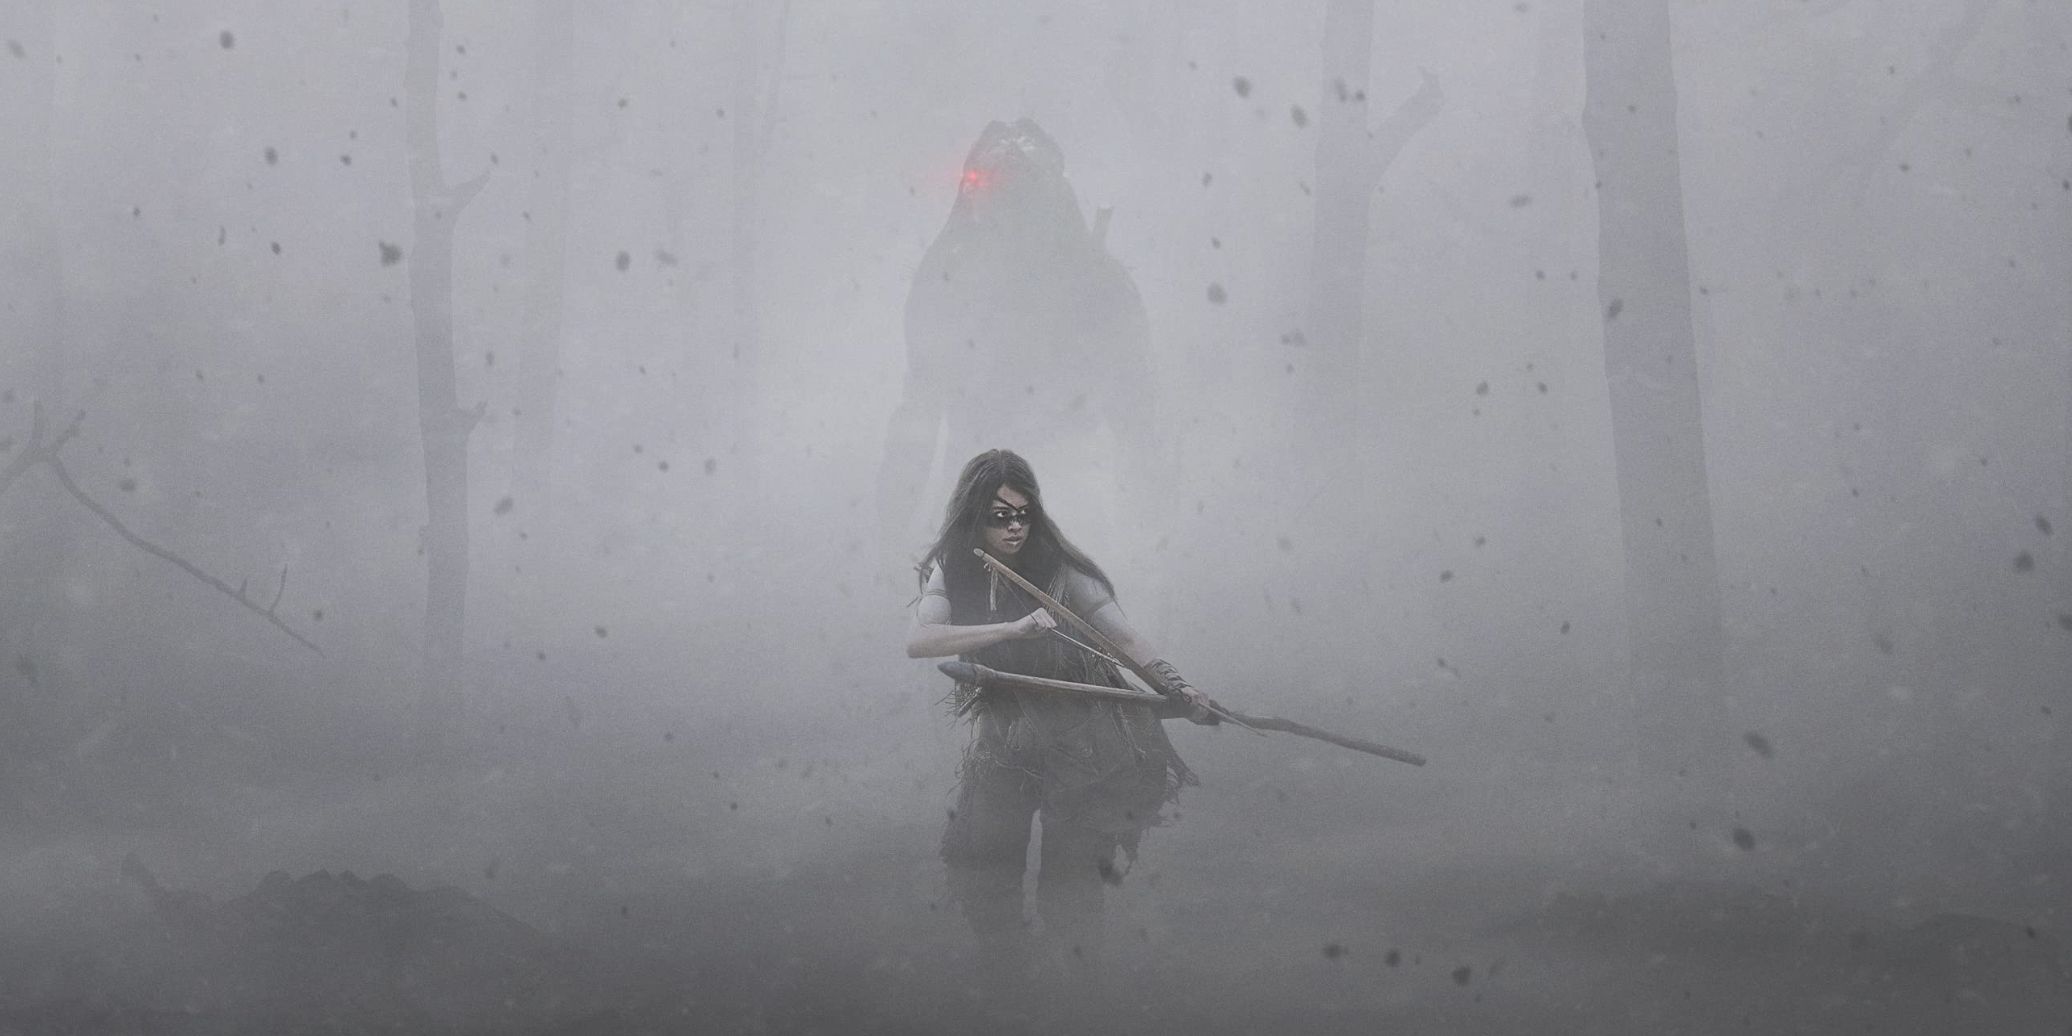 Prey: Naru looks for the Predator in the fog, unaware the Predator is behind her